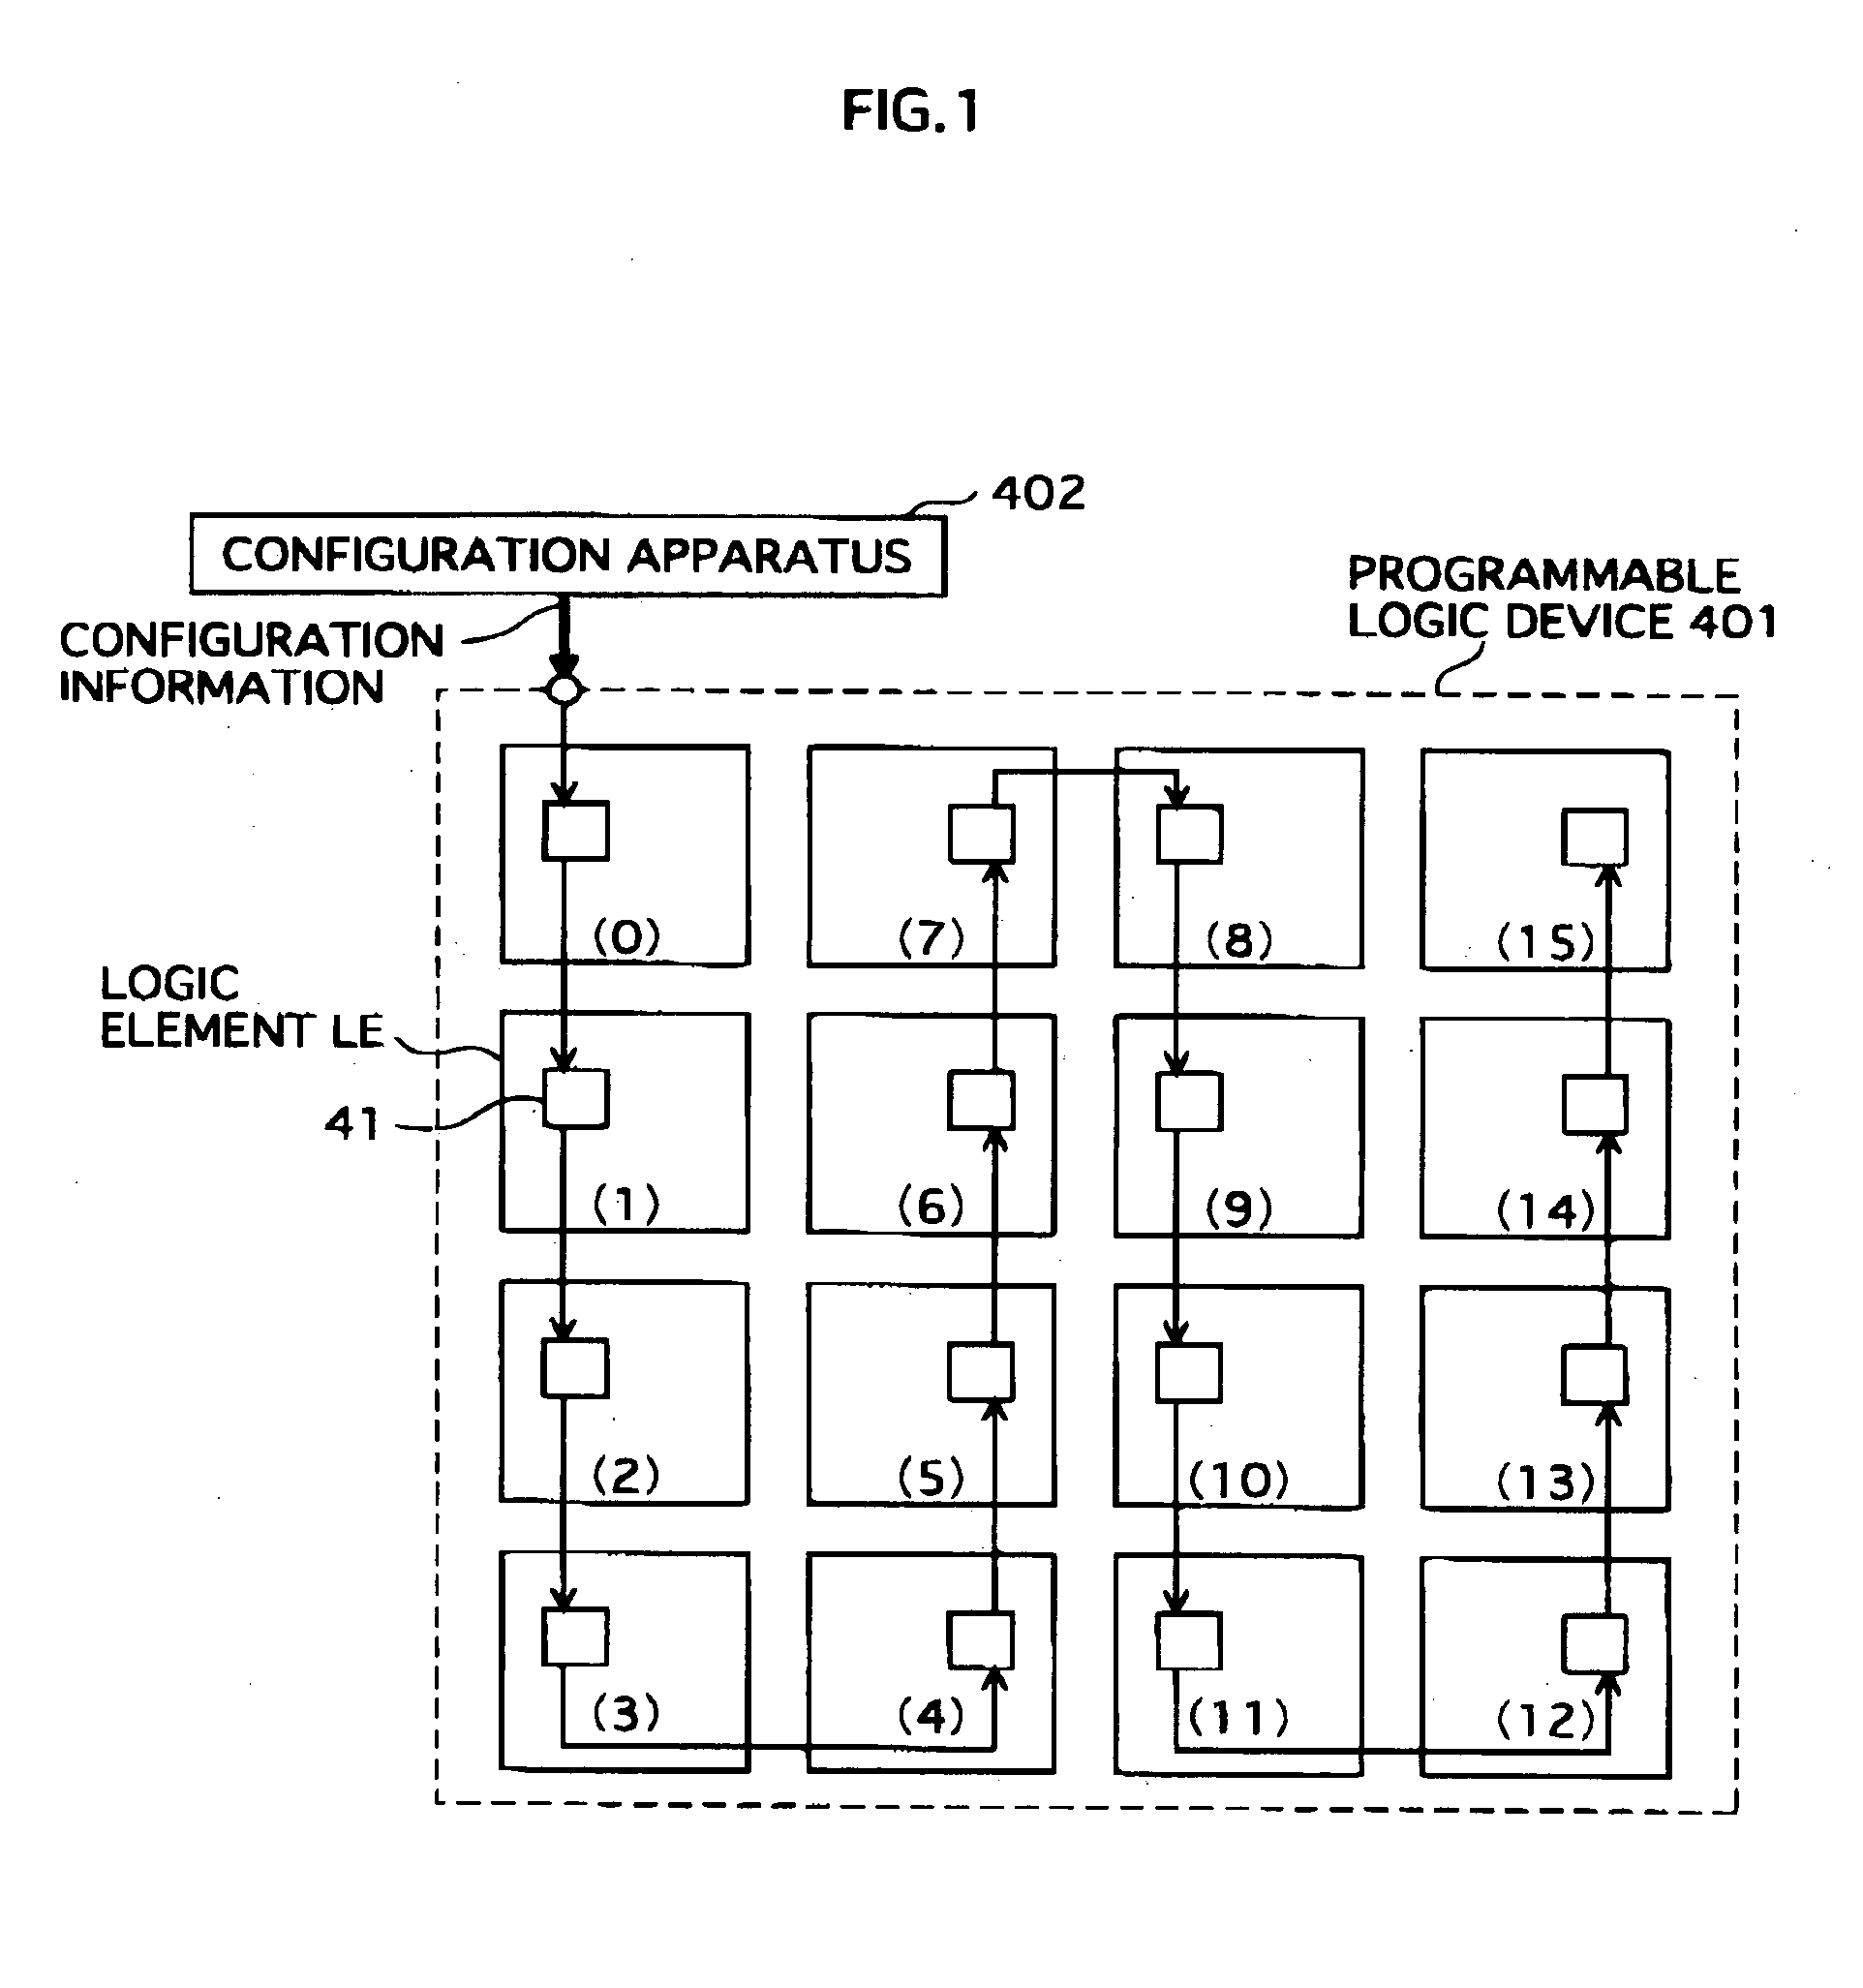 Programable logic device, configuration apparatus, and configuration method